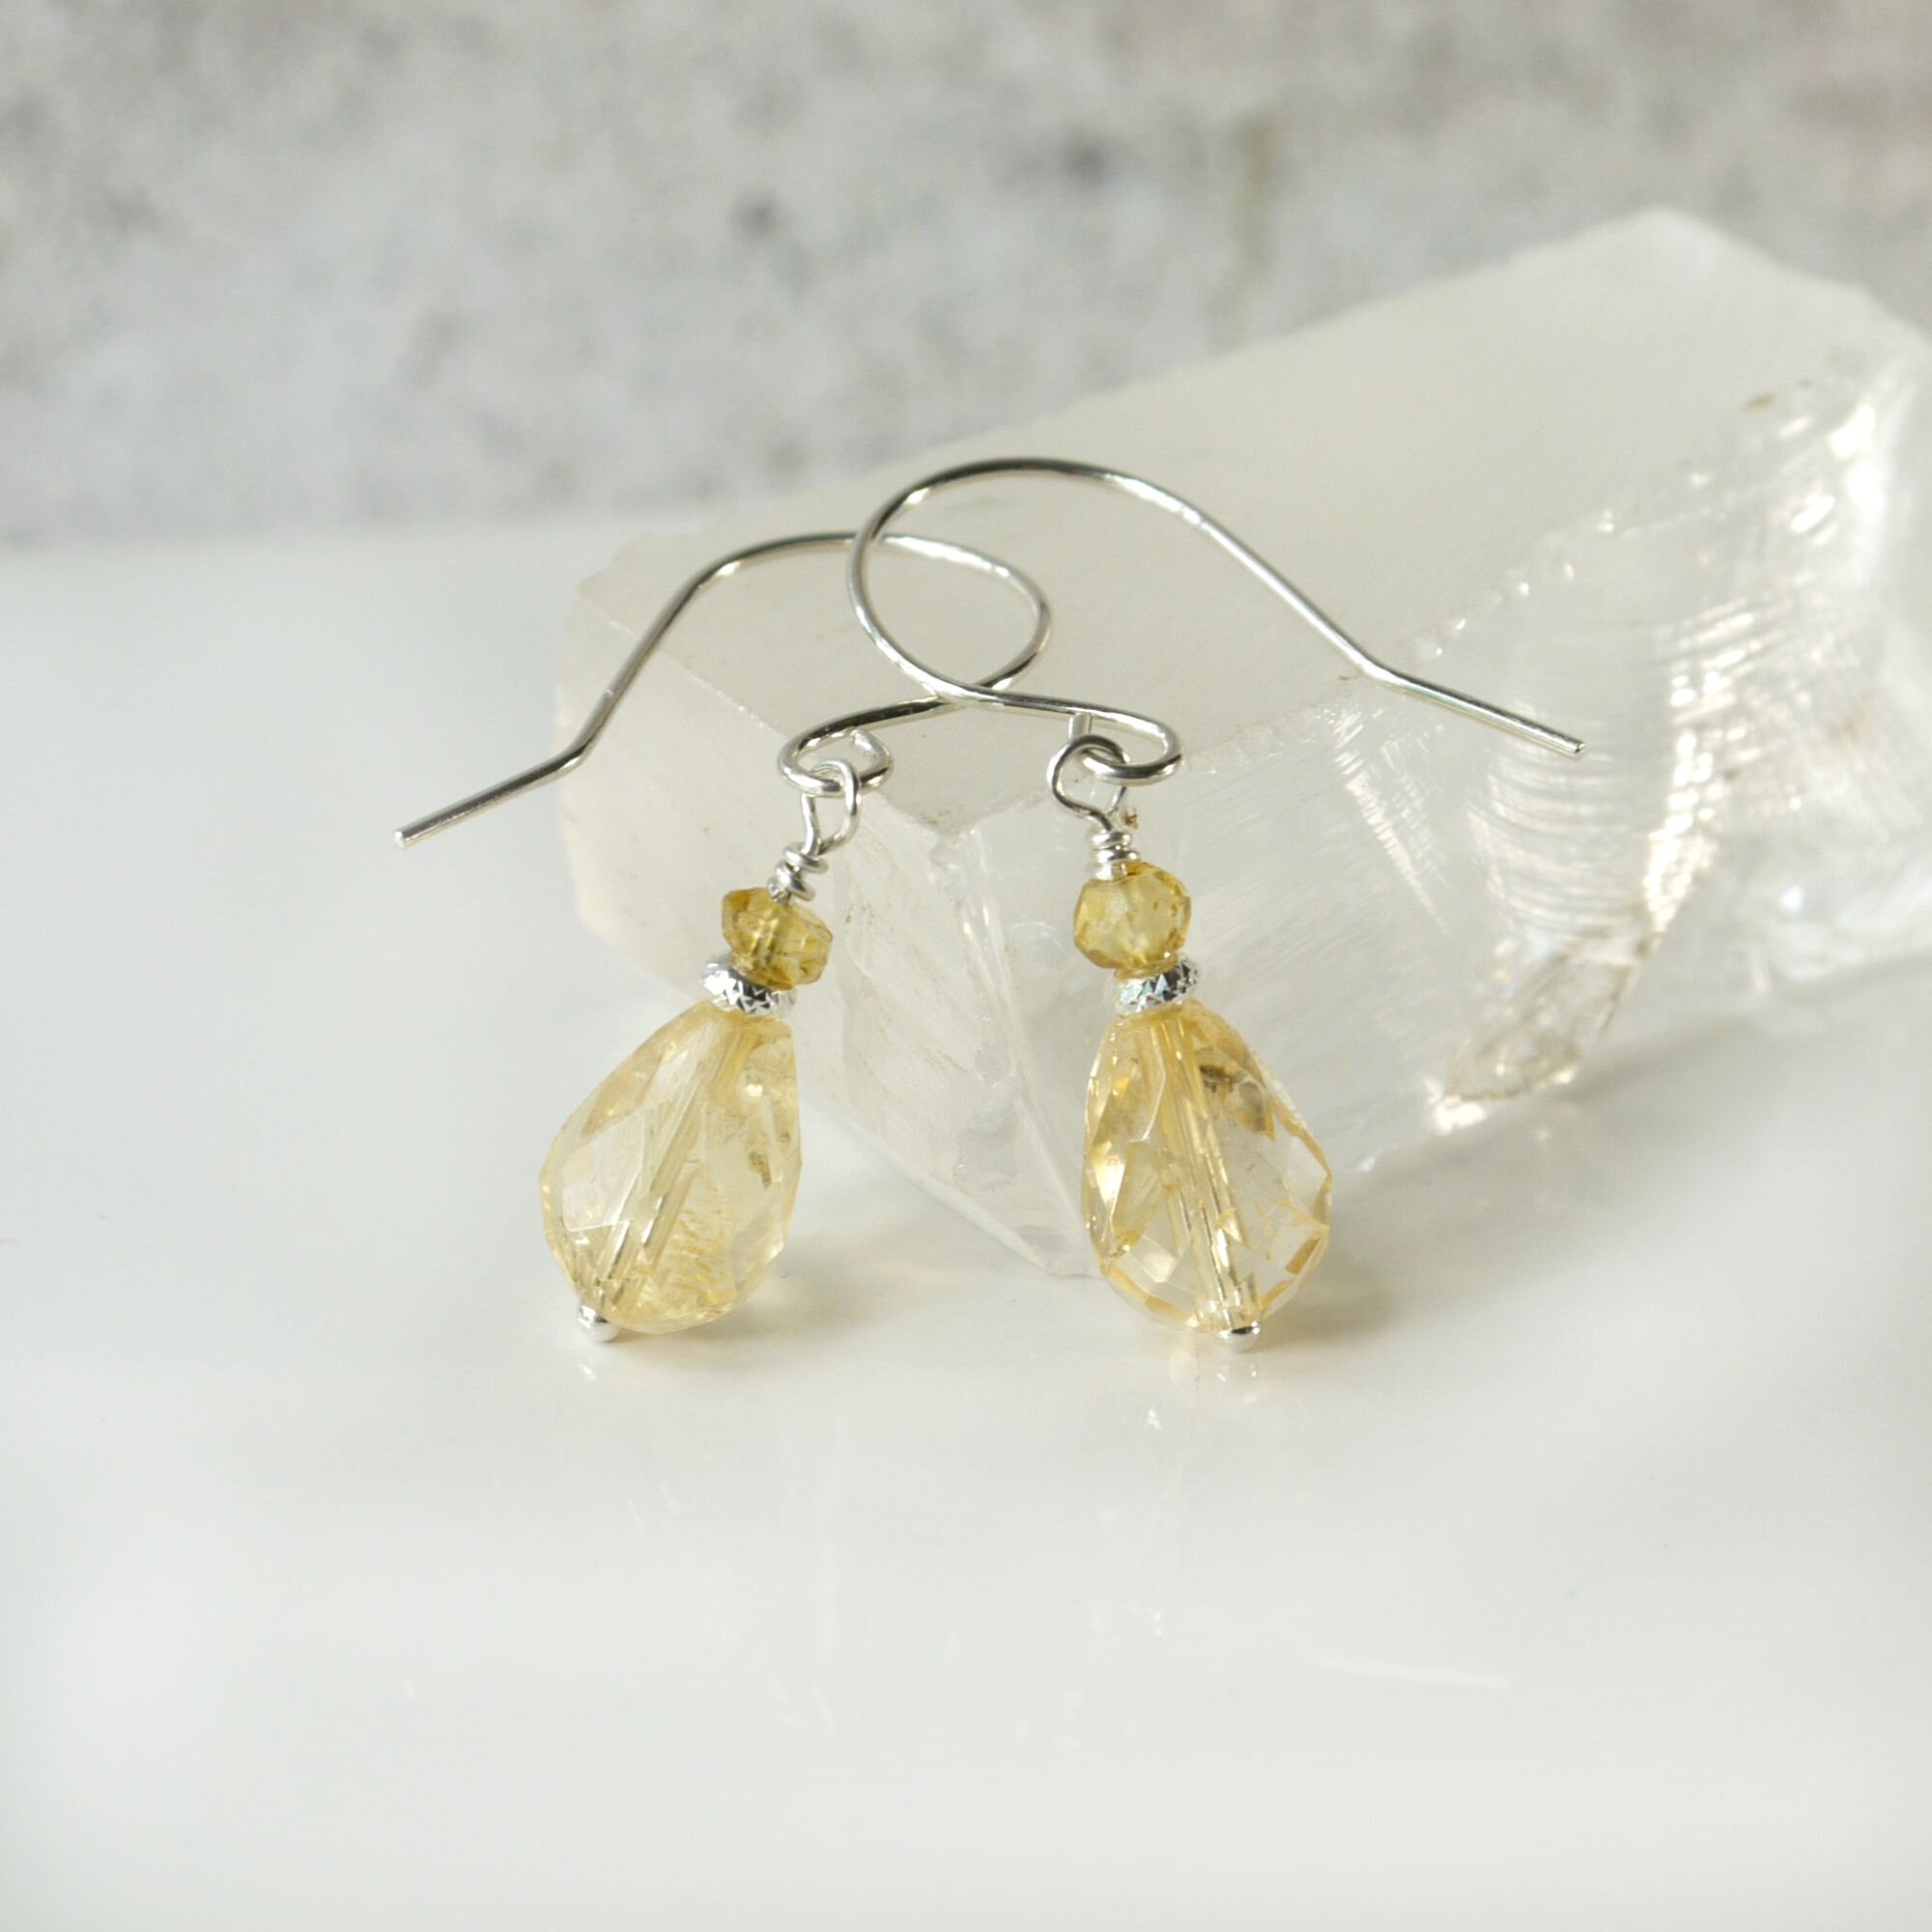 https://images.squarespace-cdn.com/content/v1/58ece8dff7e0ab189ab817d6/1602347991940-BRB2JQAJD26H0TCTDY0G/33c-yellow-citrine-drop-earrings-sterling-silver-artisan-handmade-iris-elm-jewelry.jpg